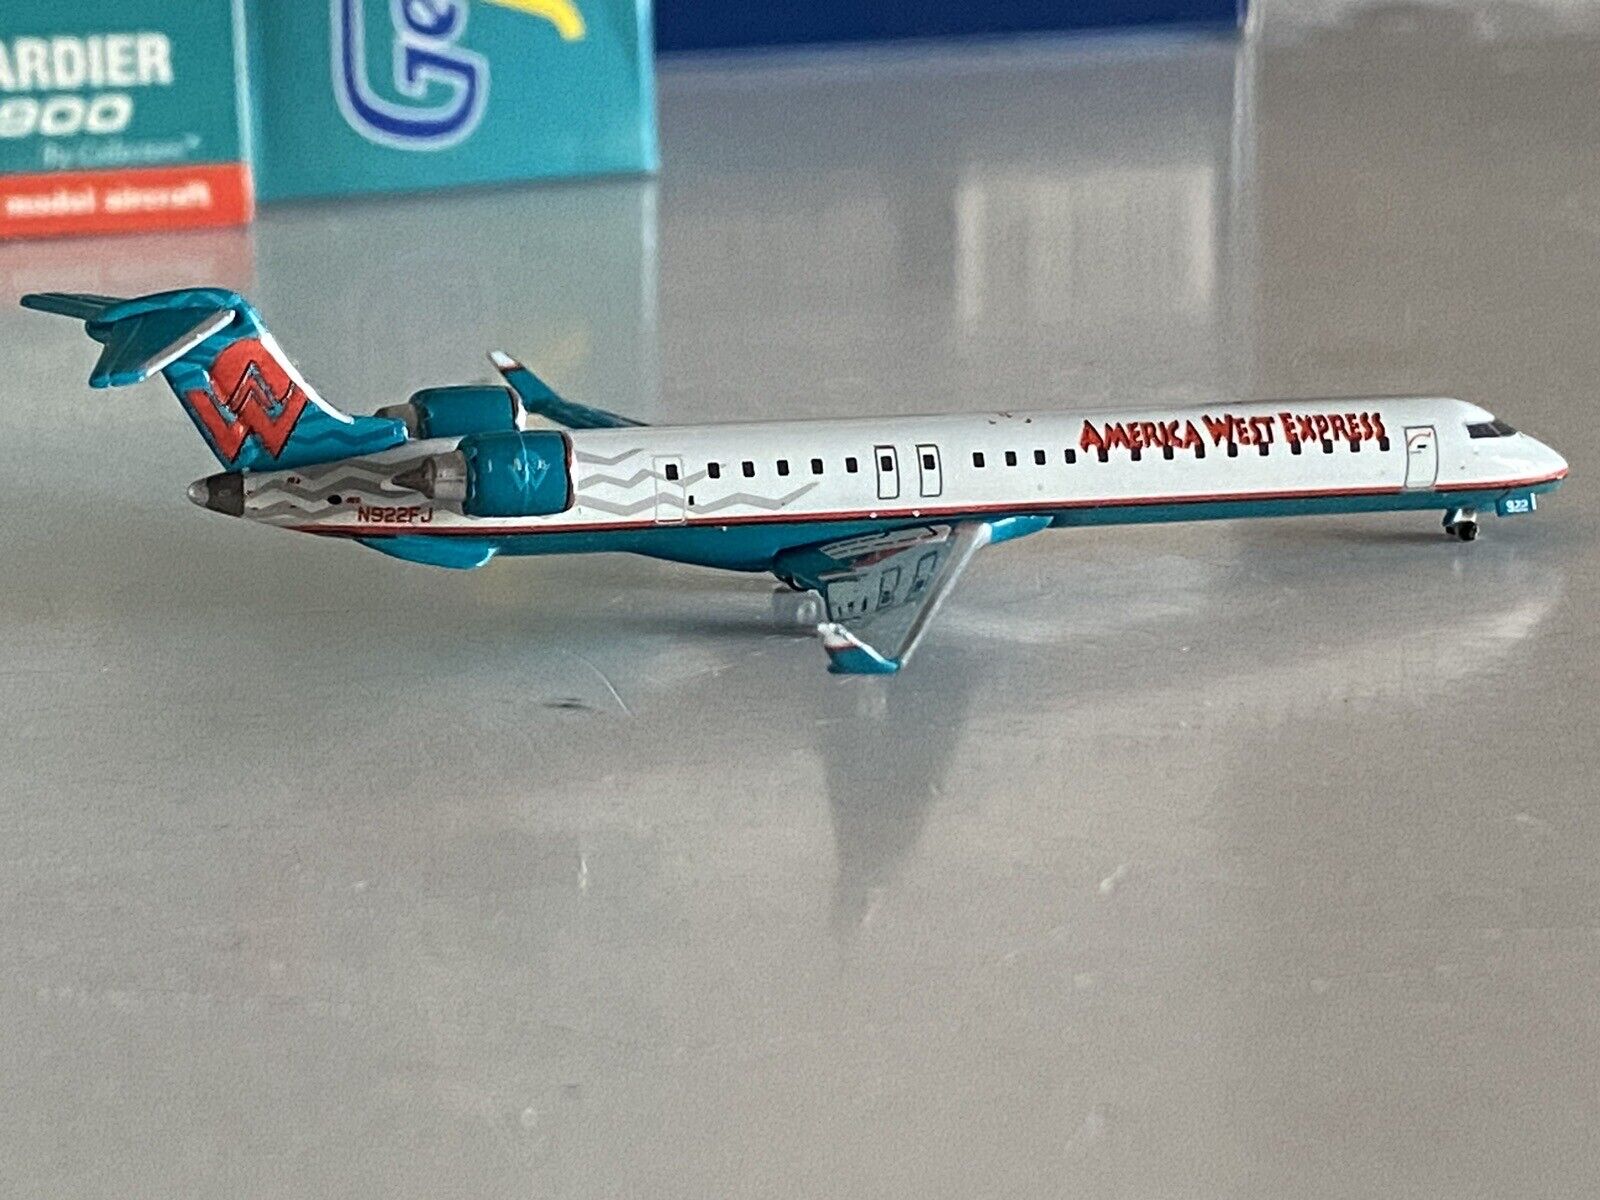 Gemini Jets America West Express Bombardier CRJ-900 1:400 N922FJ GJAWE725